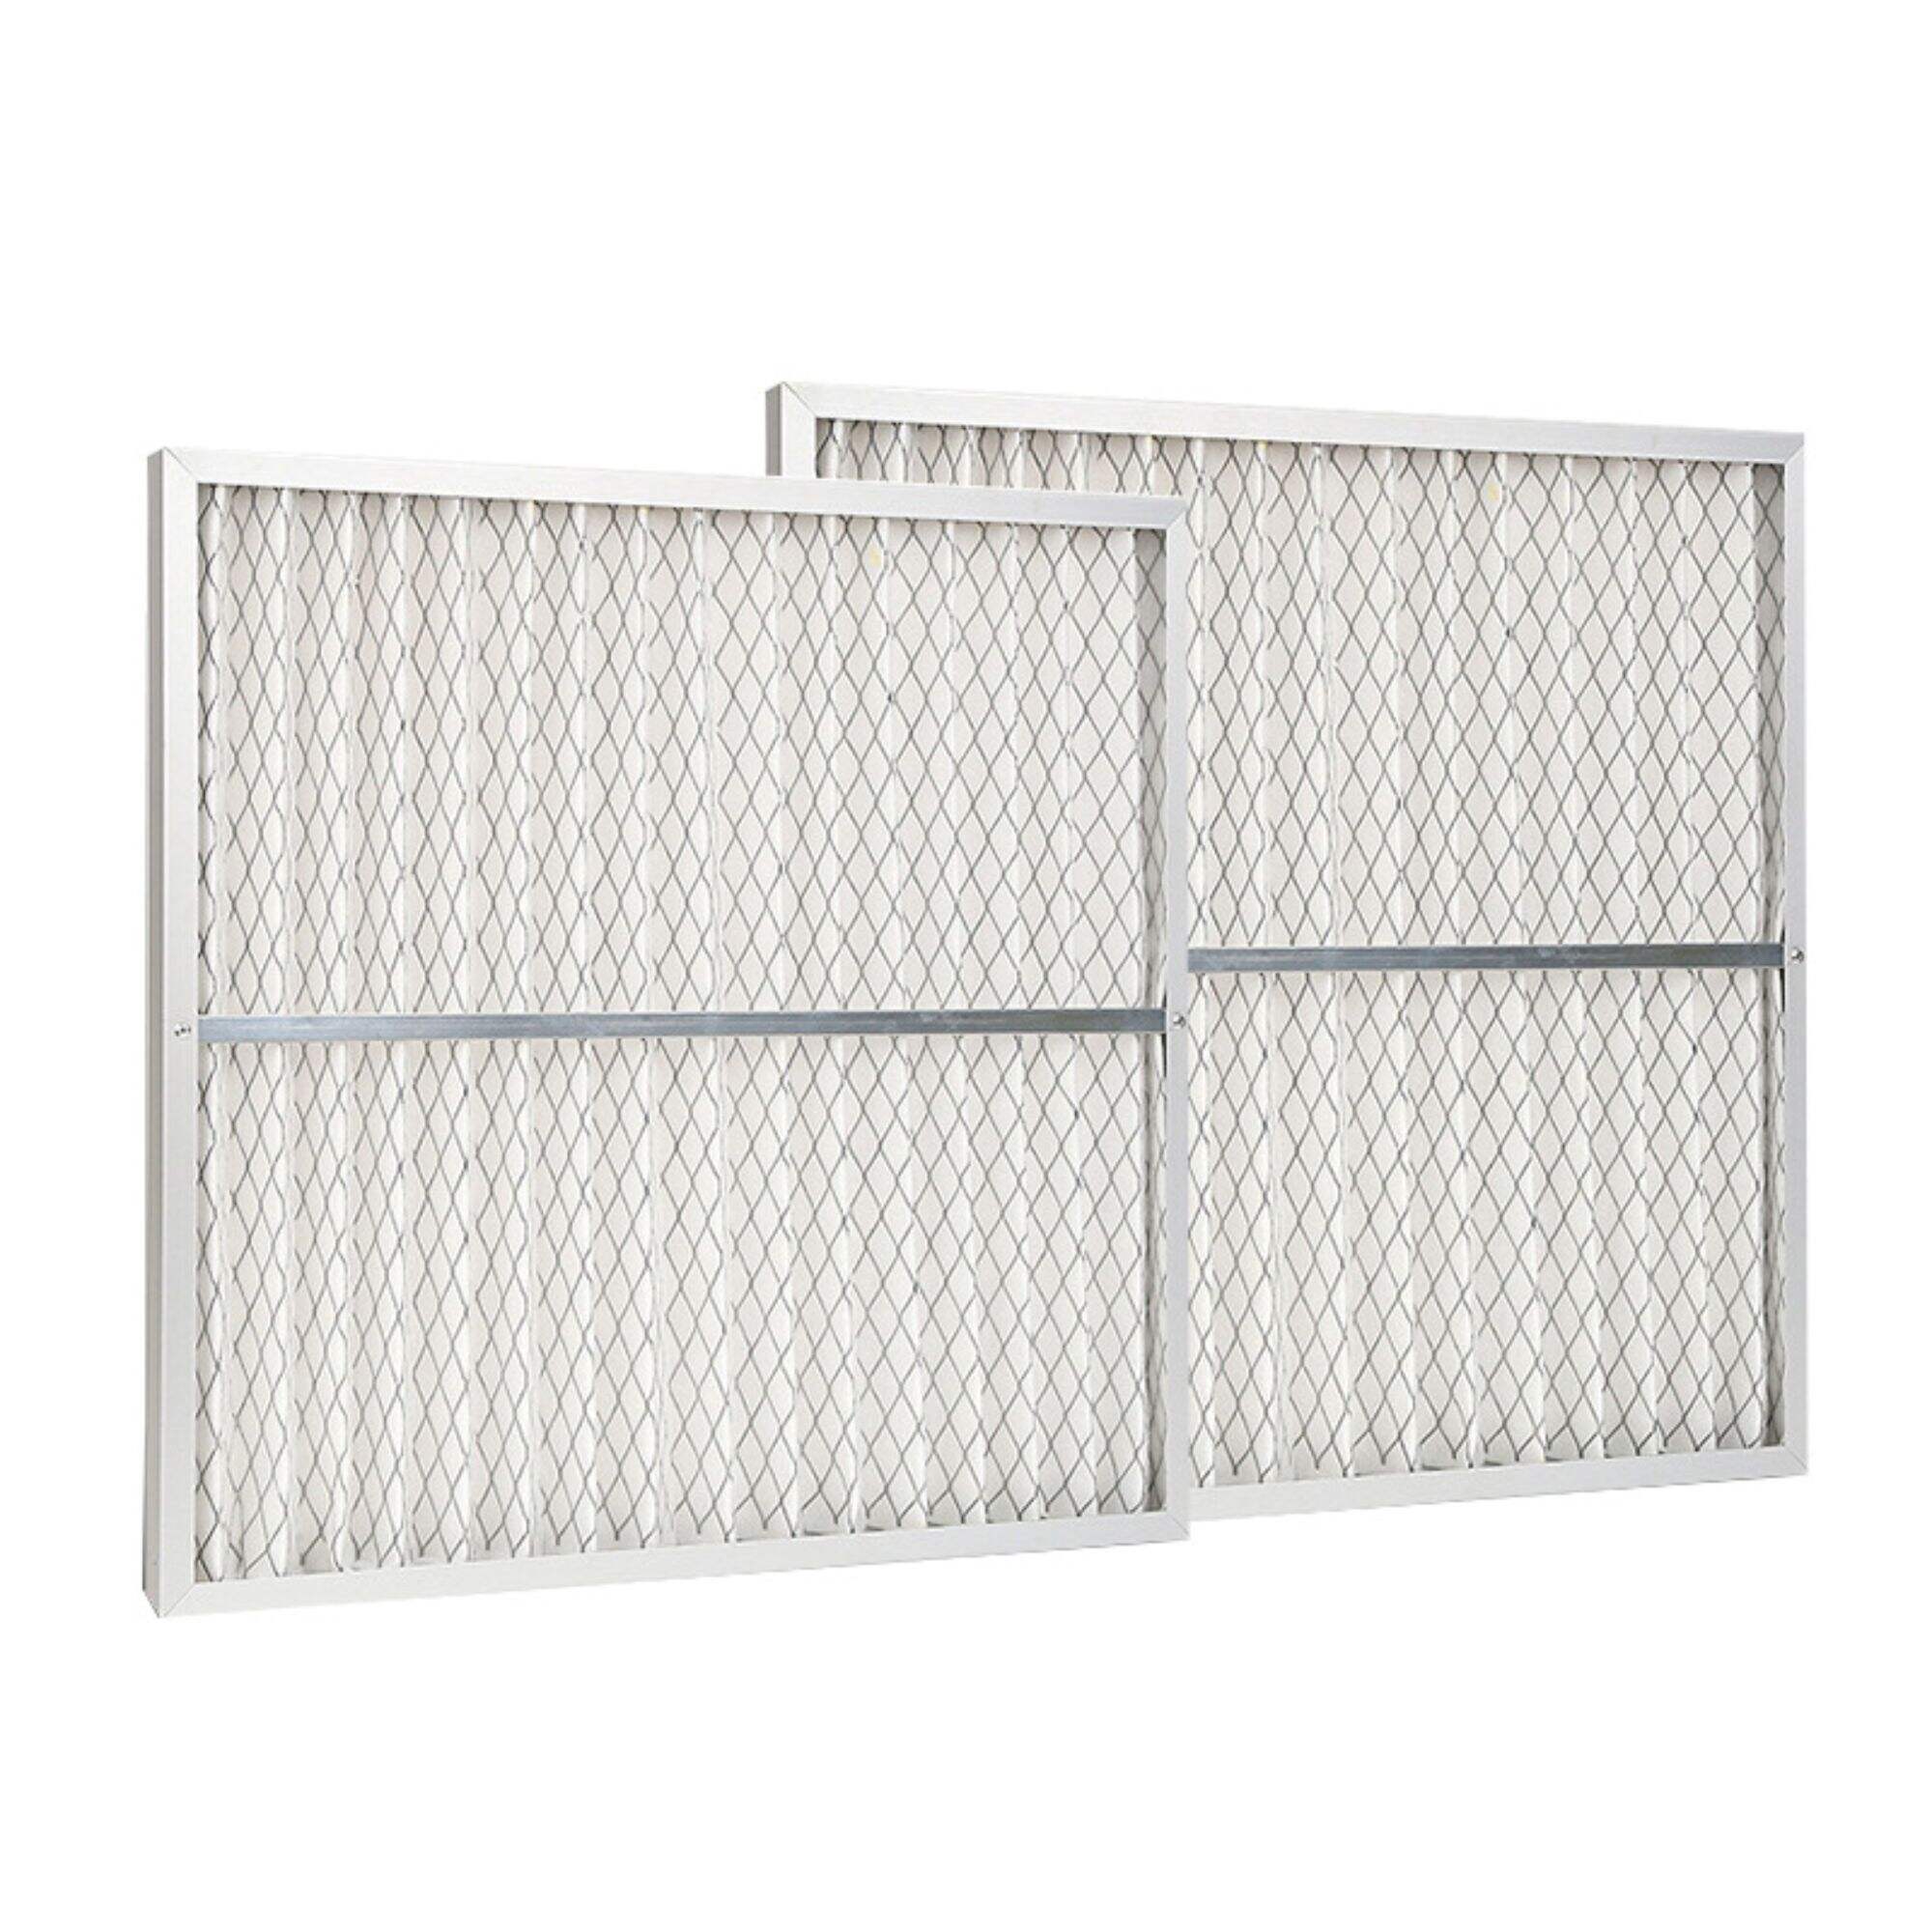 AC Furnace Aluminum Frame Folded Primary Air Panel Pre-Filter Medium Efficiency Filter